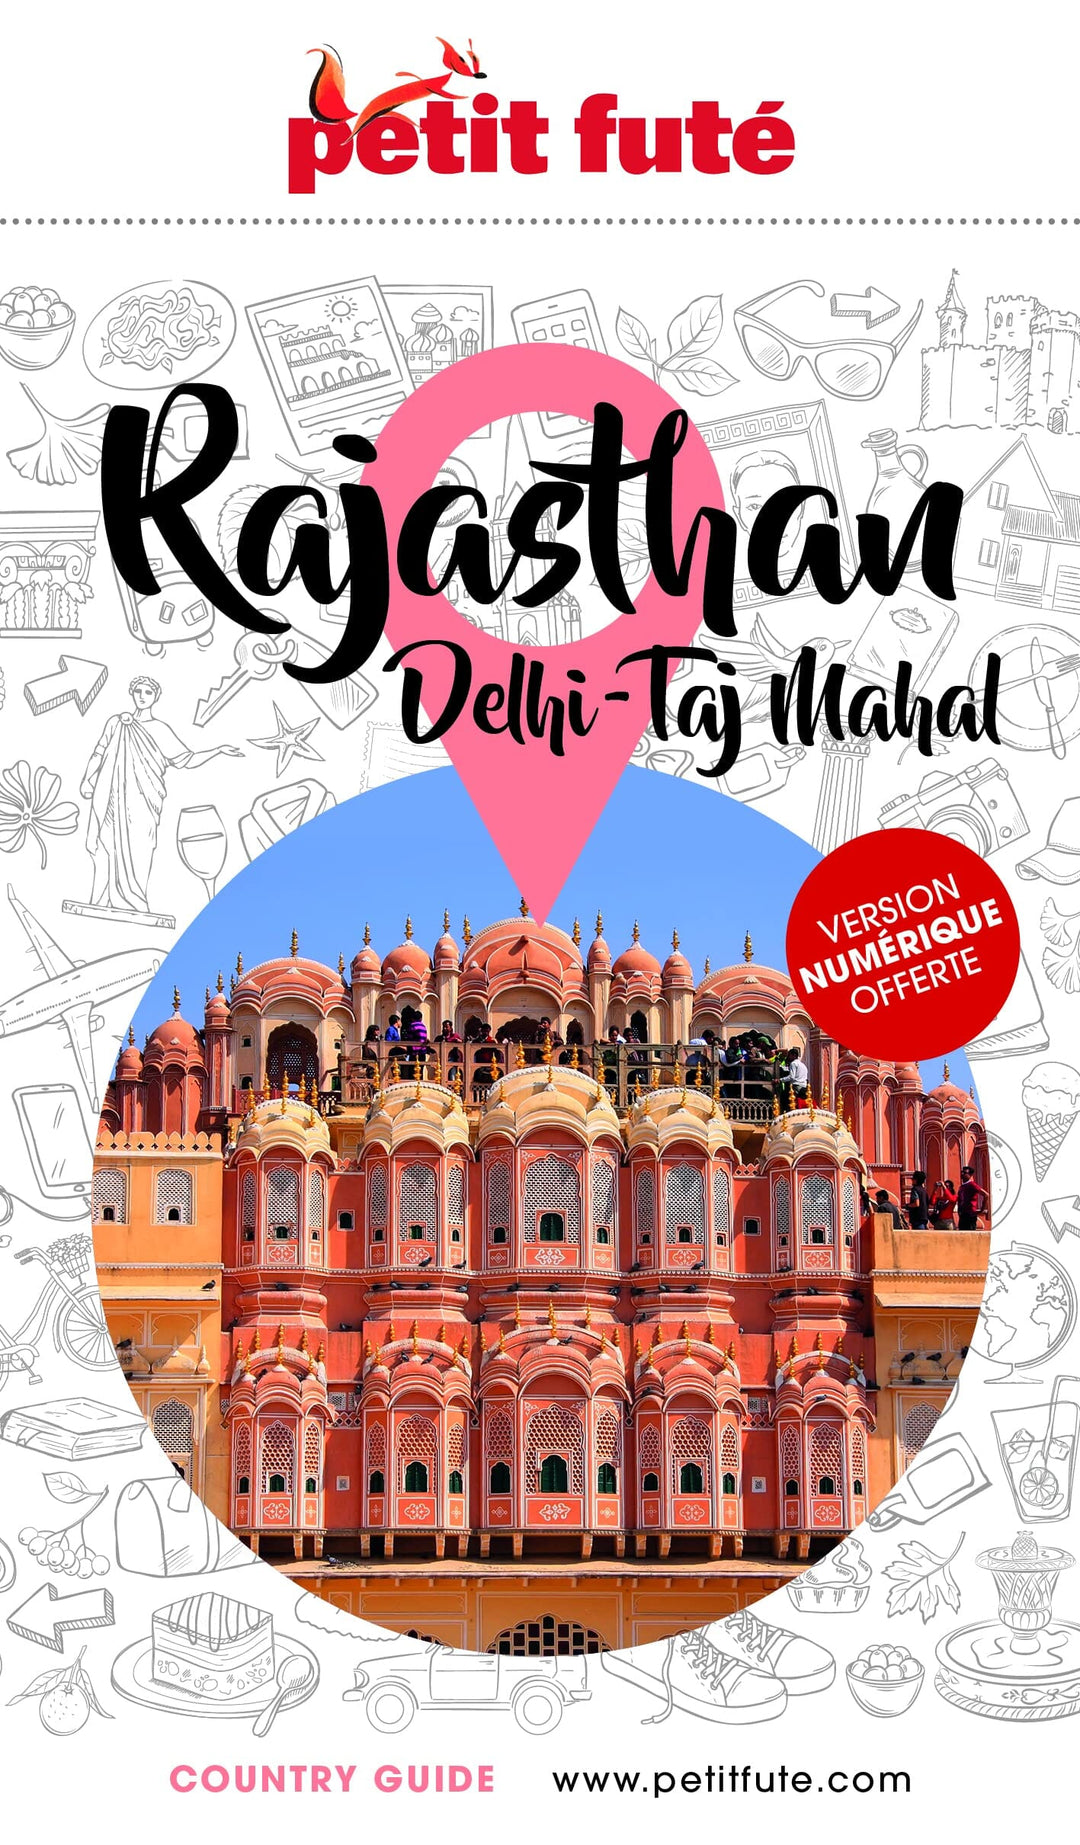 Guide de voyage - Rajasthan, Delhi, Taj Mahal | Petit Futé guide de voyage Petit Futé 